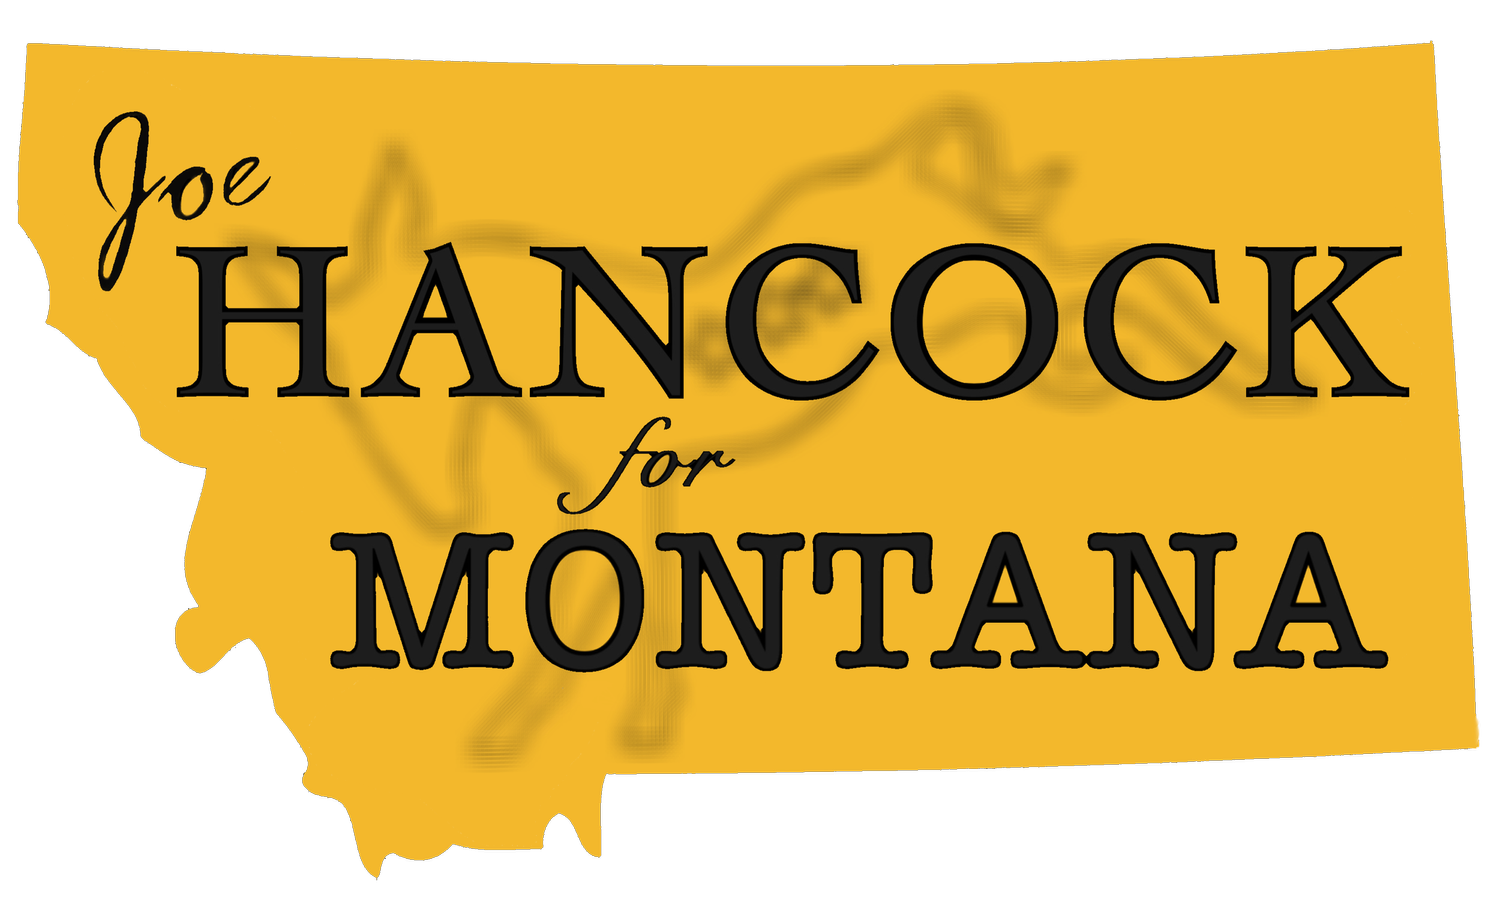 Joe Hancock for Montana